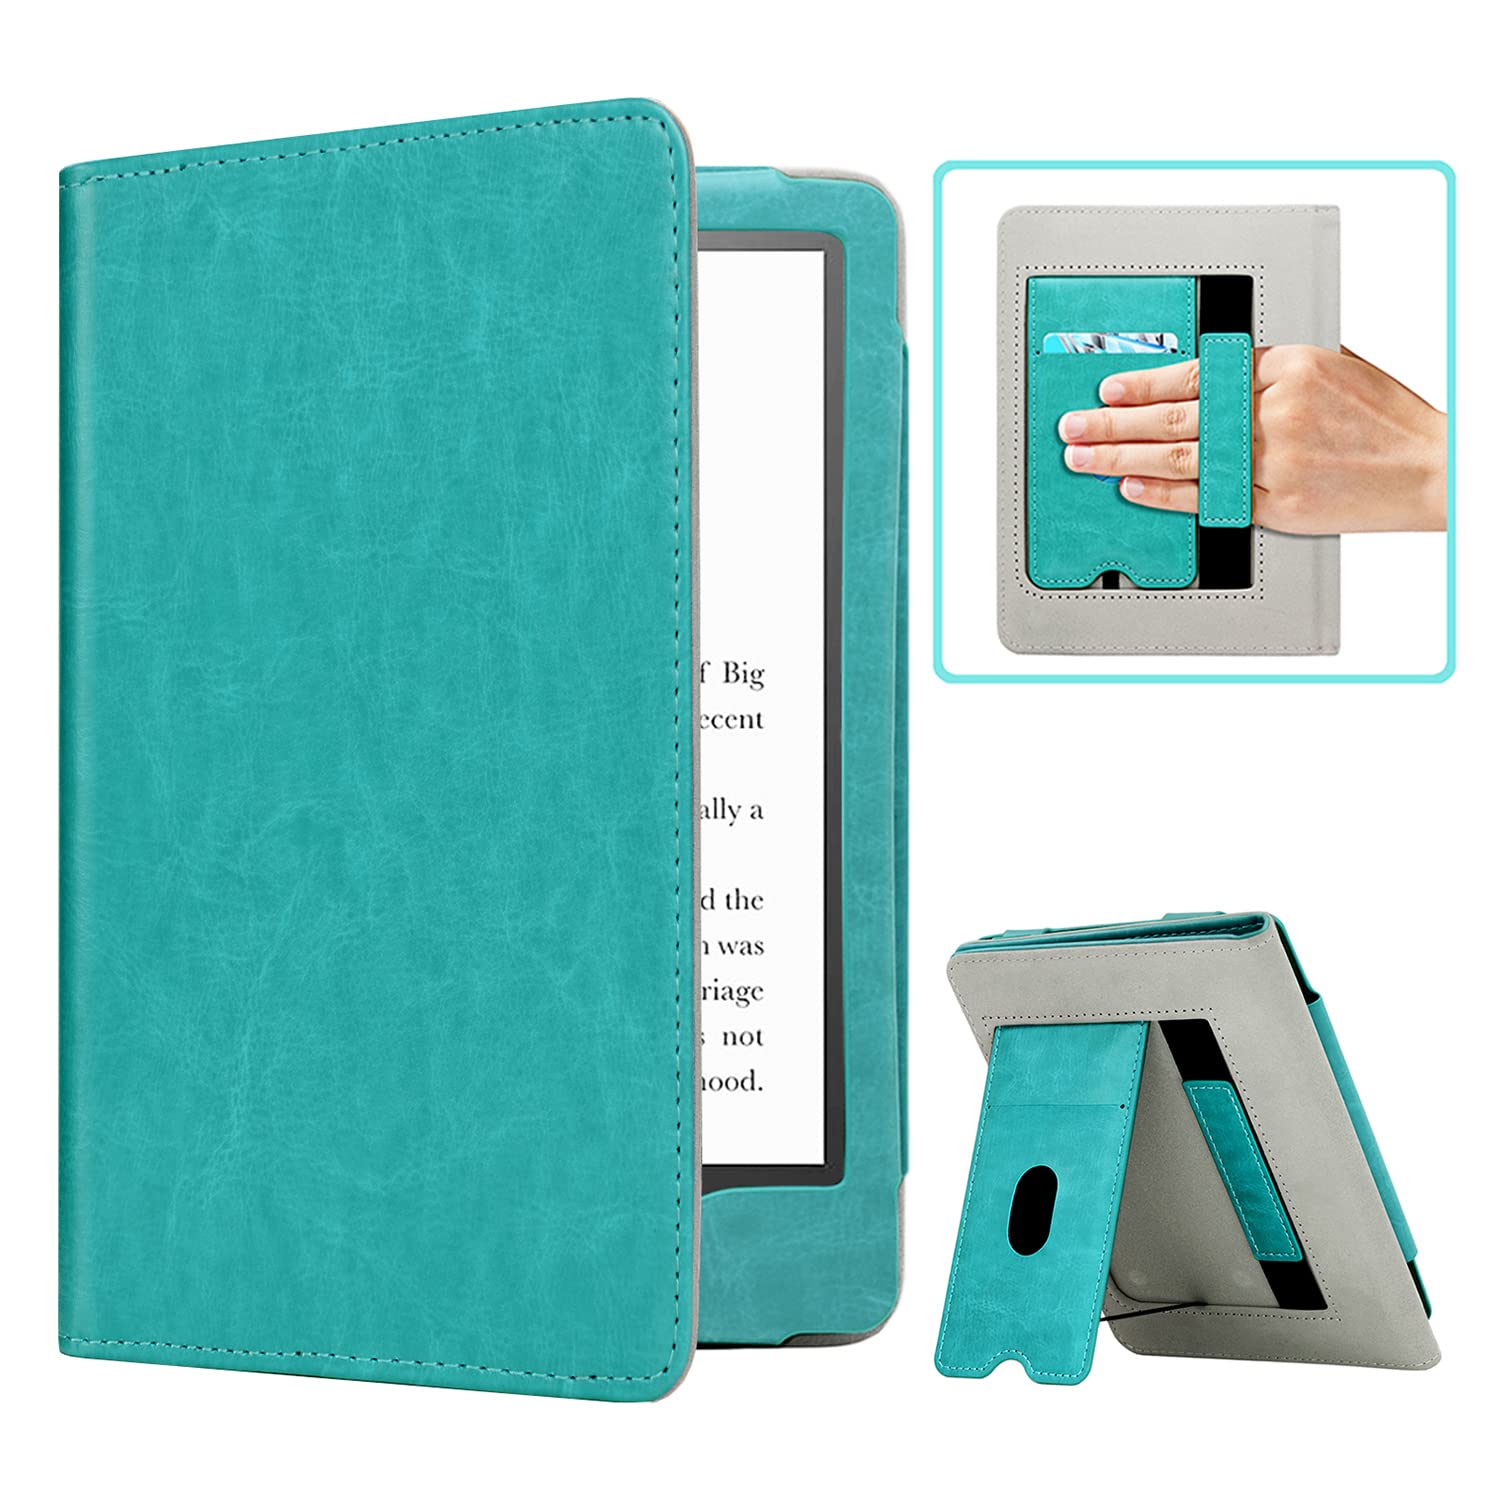 RSAquar Kindle Paperwhite Case for 11th Generation 6.8